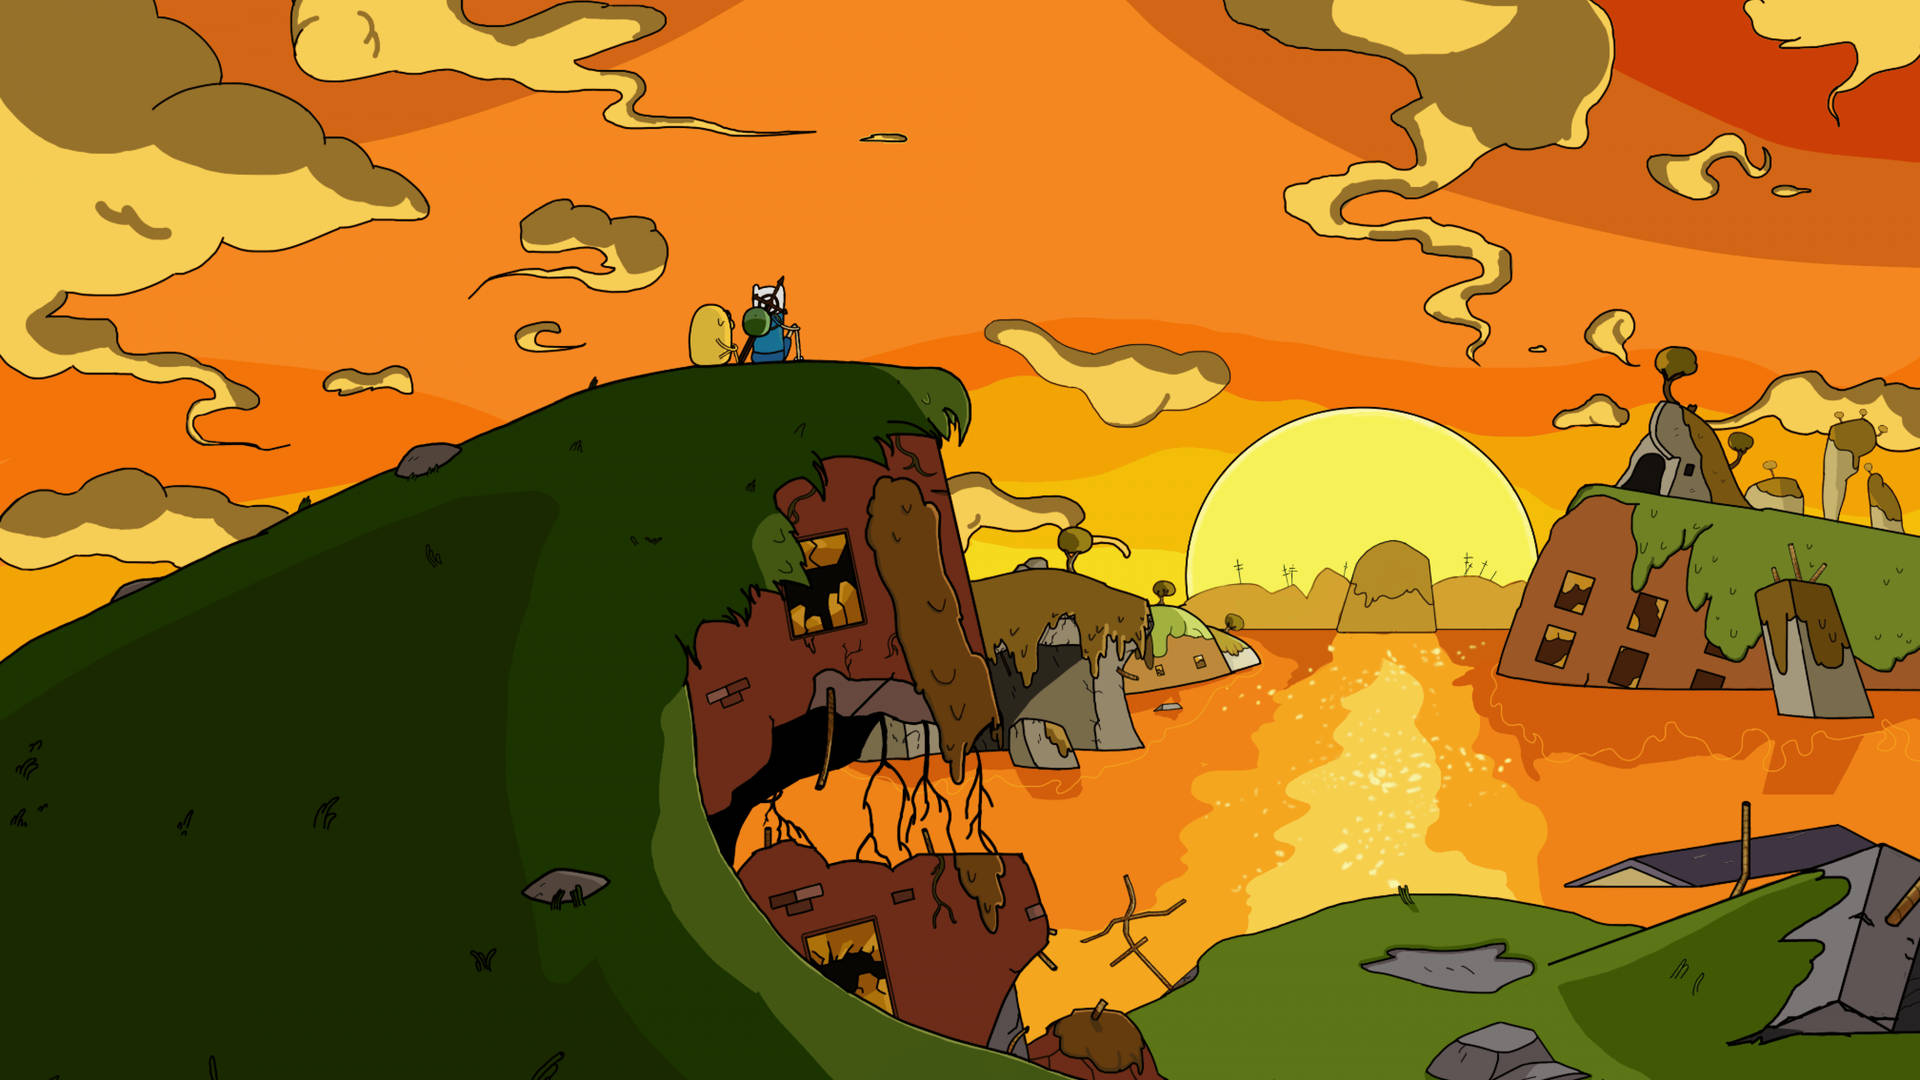 Free Adventure Time Wallpaper Downloads, [100+] Adventure Time Wallpapers  for FREE 